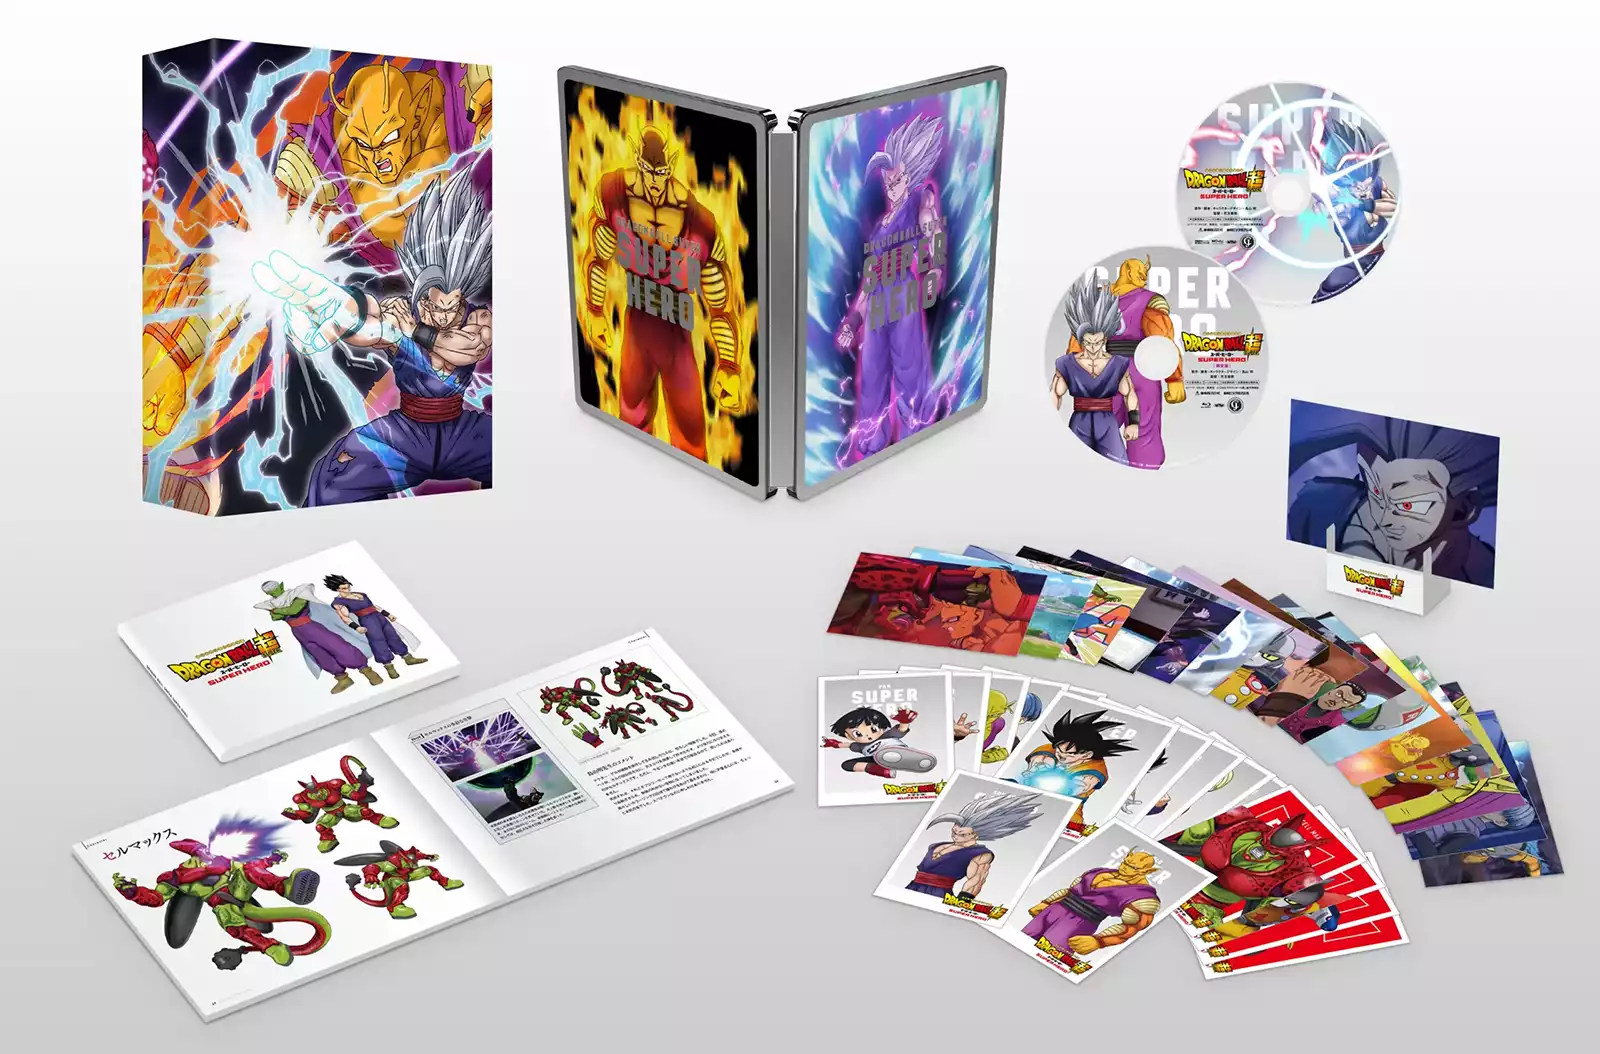 Dragon Ball Super SUPER HERO (DVD / Blu-ray) : La date de sortie en France  – Dragon Ball Super en France : Actualités & News